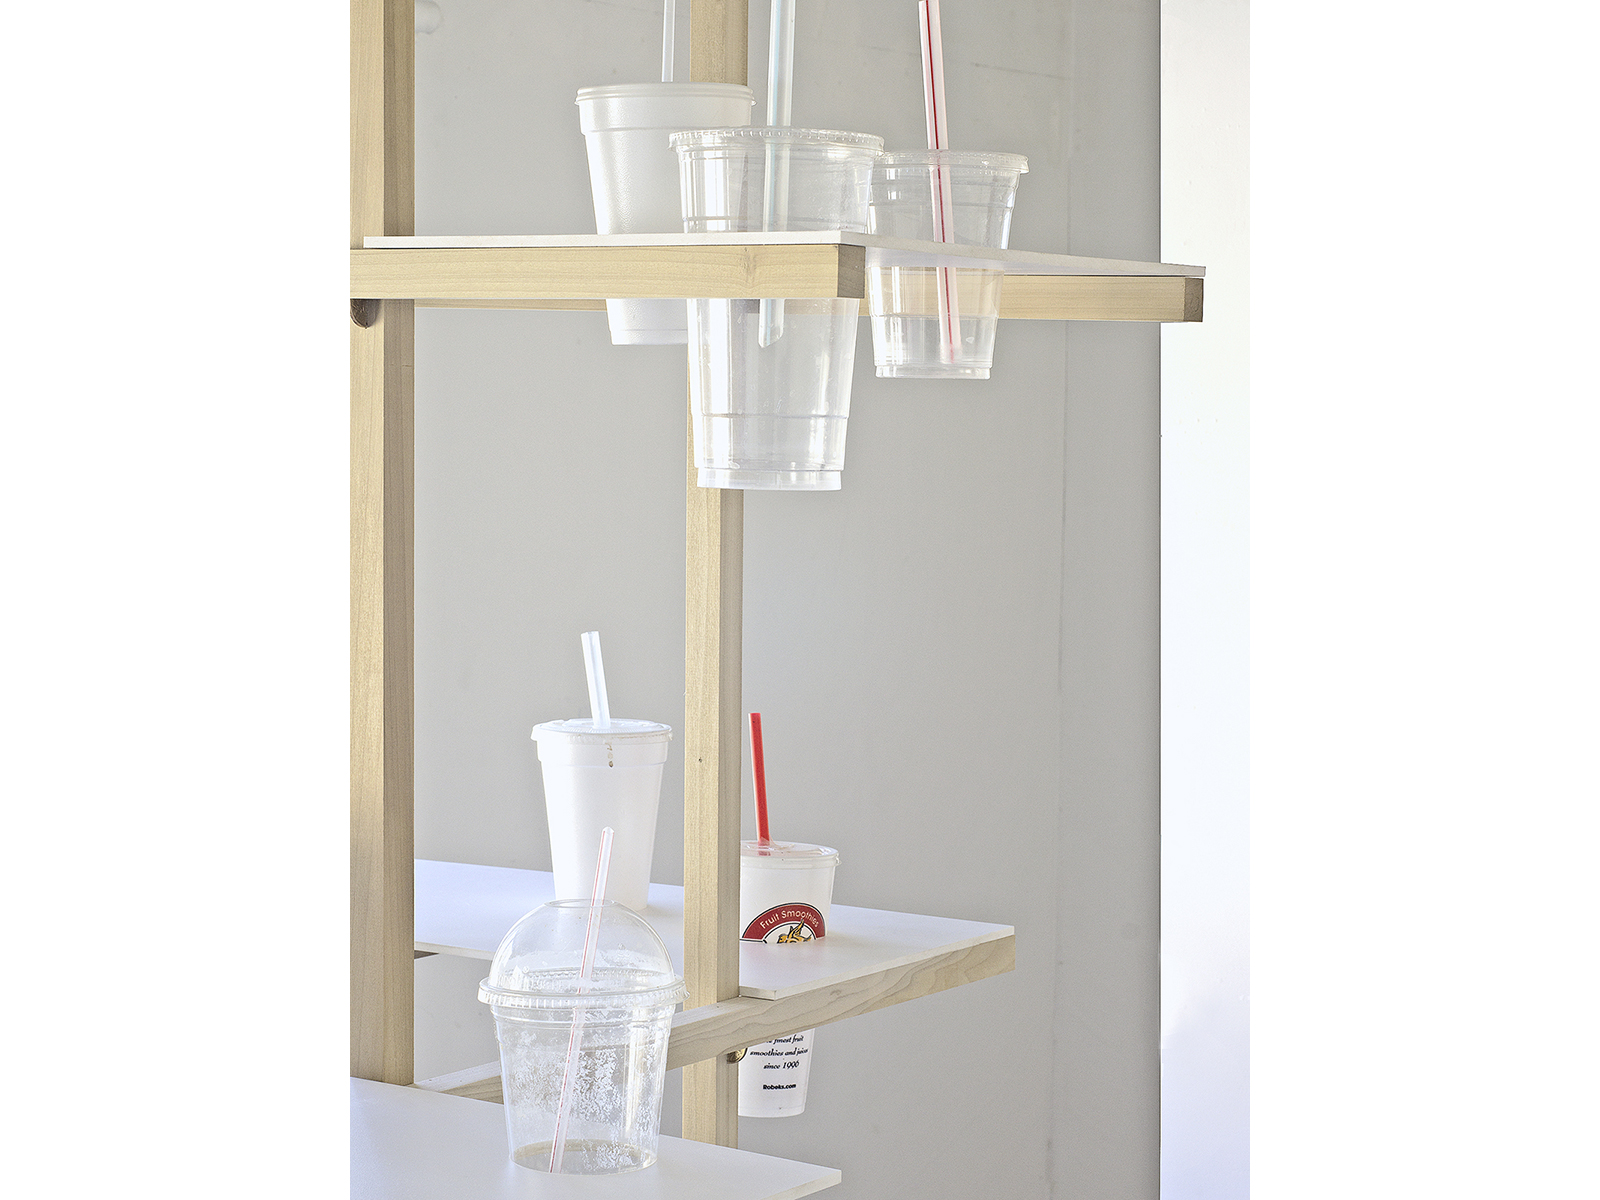 Benoit-Benoit-Delaunay-artiste-Installations-2013-A-Set-of-Valuable-Skills-Cups-Display-detail-01